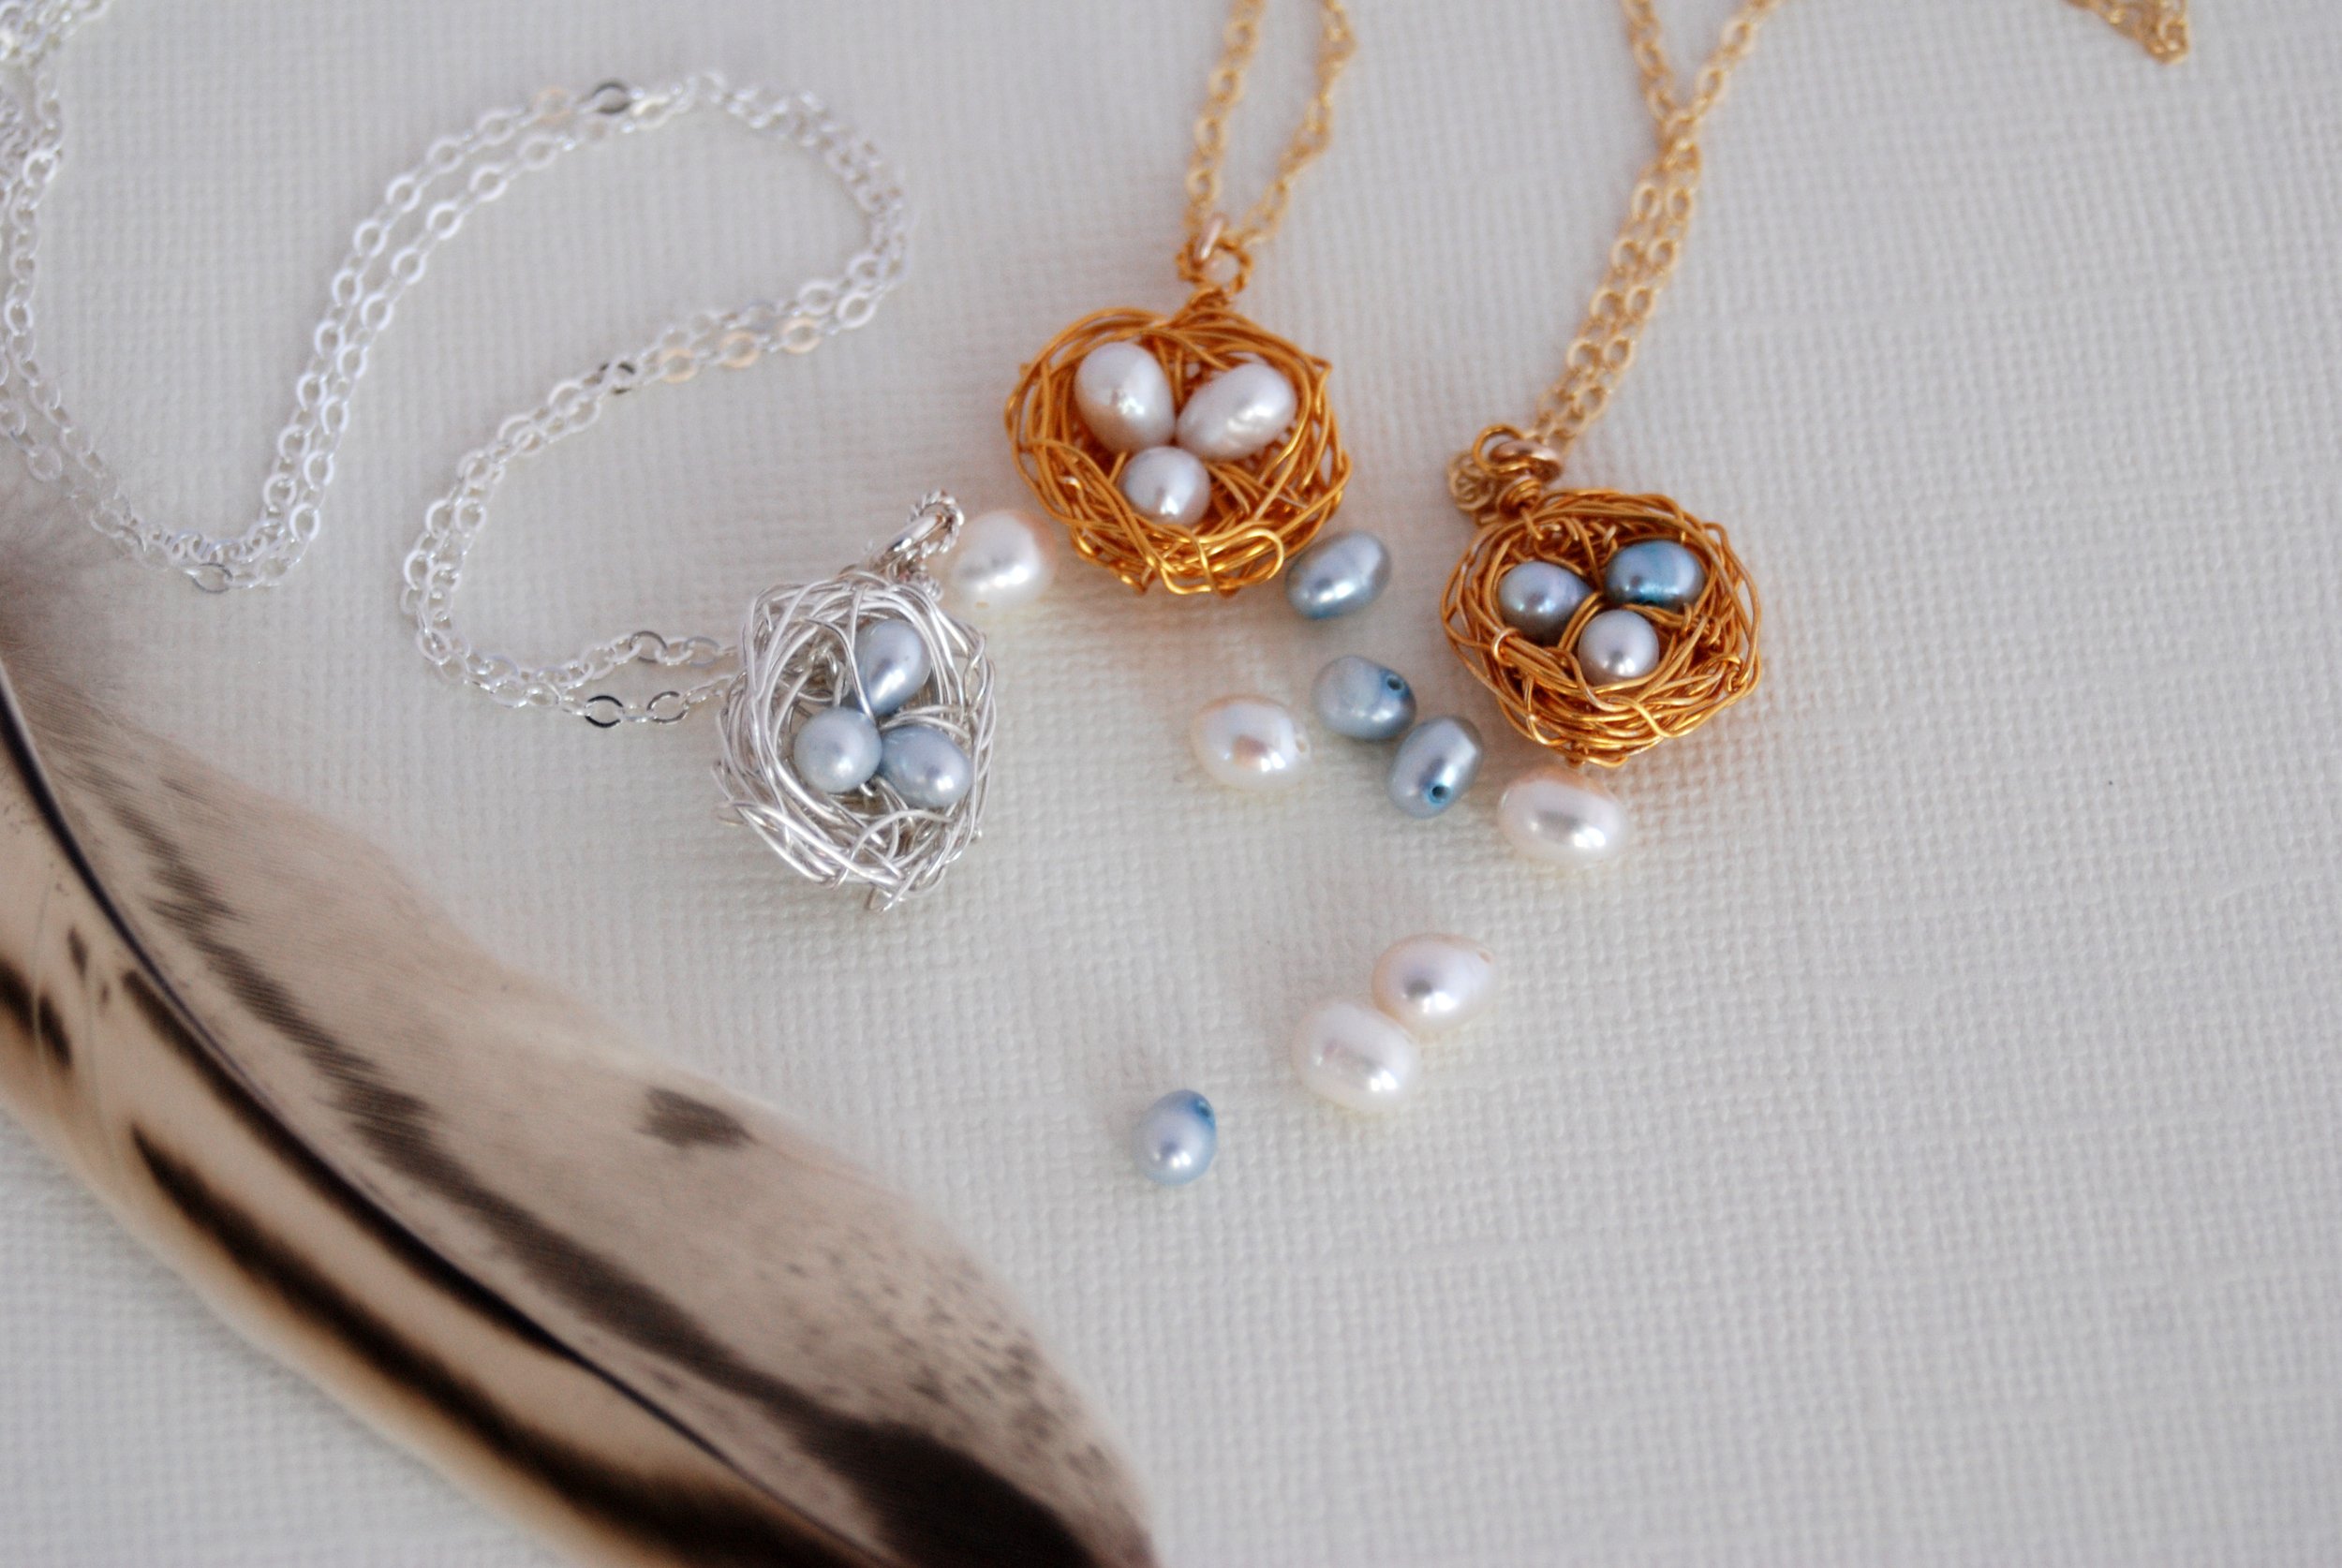 33.34 Carat Sapphire and White Diamond Necklace -V42519 | vividdiamonds